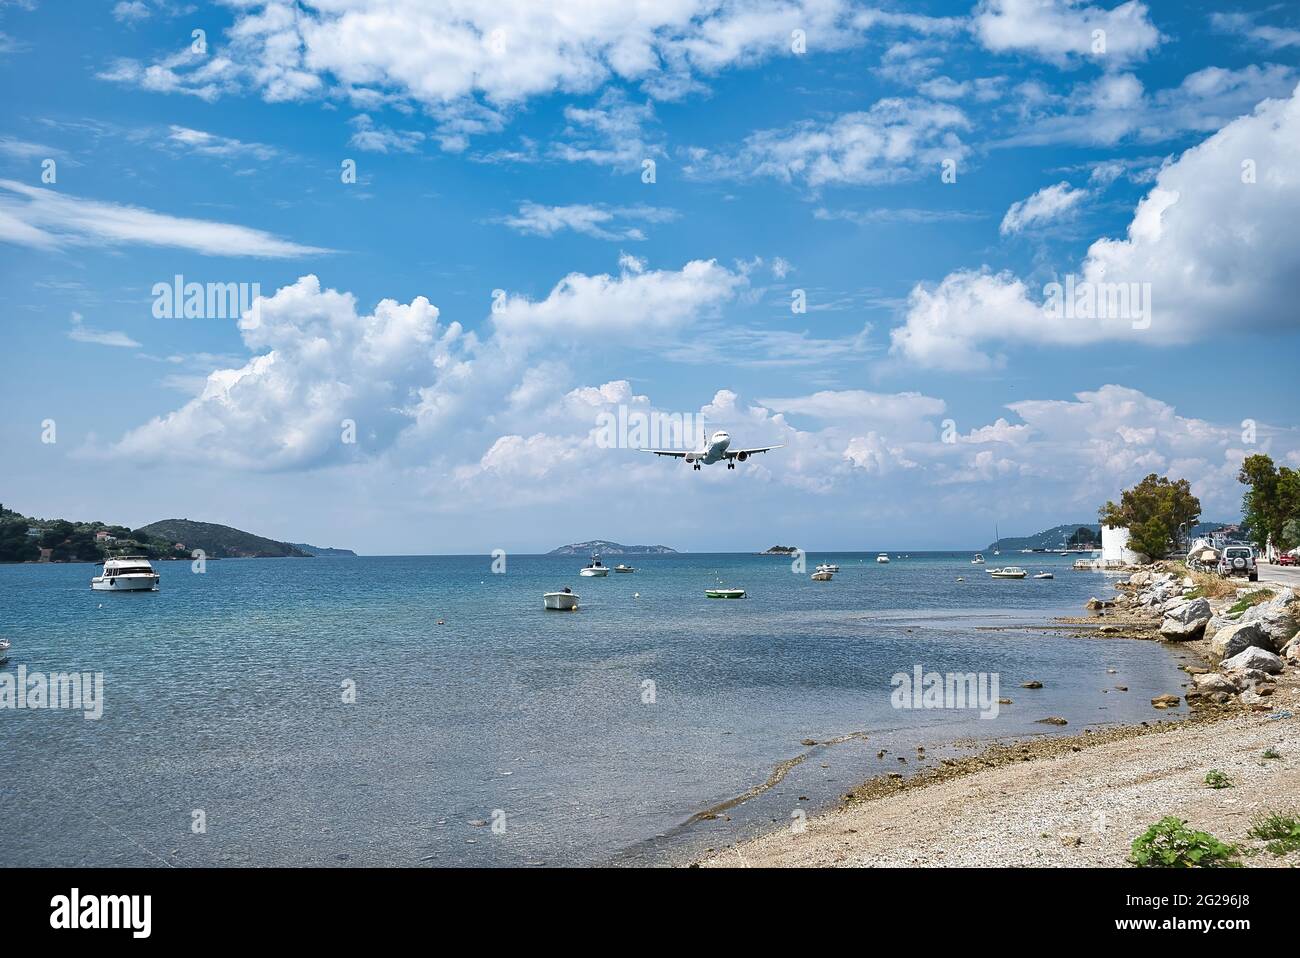 SKIATHOS, GRIECHENLAND - 09. Jun 2021: Condor airbus a321, Landung auf dem Flughafen Skiathos, Tourism 2021, COVID-frei. Skiathos, Griechenland, 6-9-2021 Stockfoto